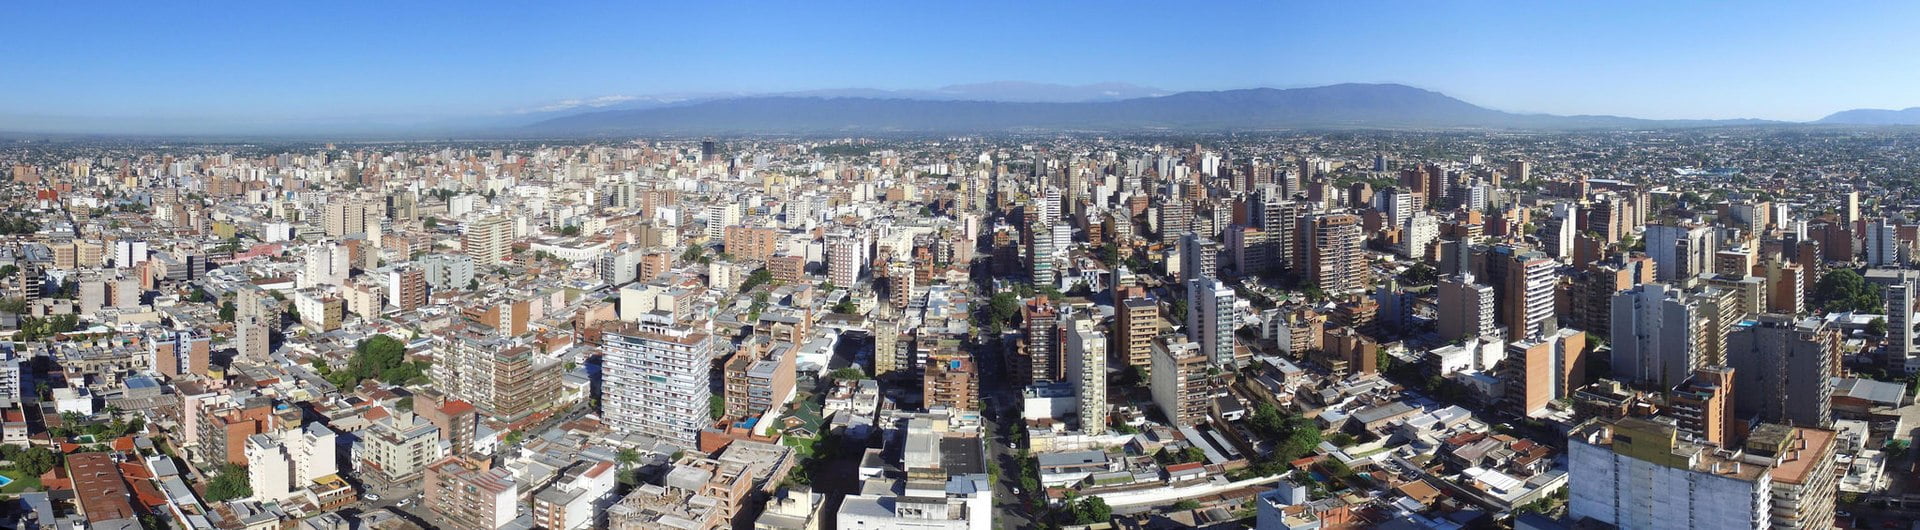 Panoramica del centro tucumano